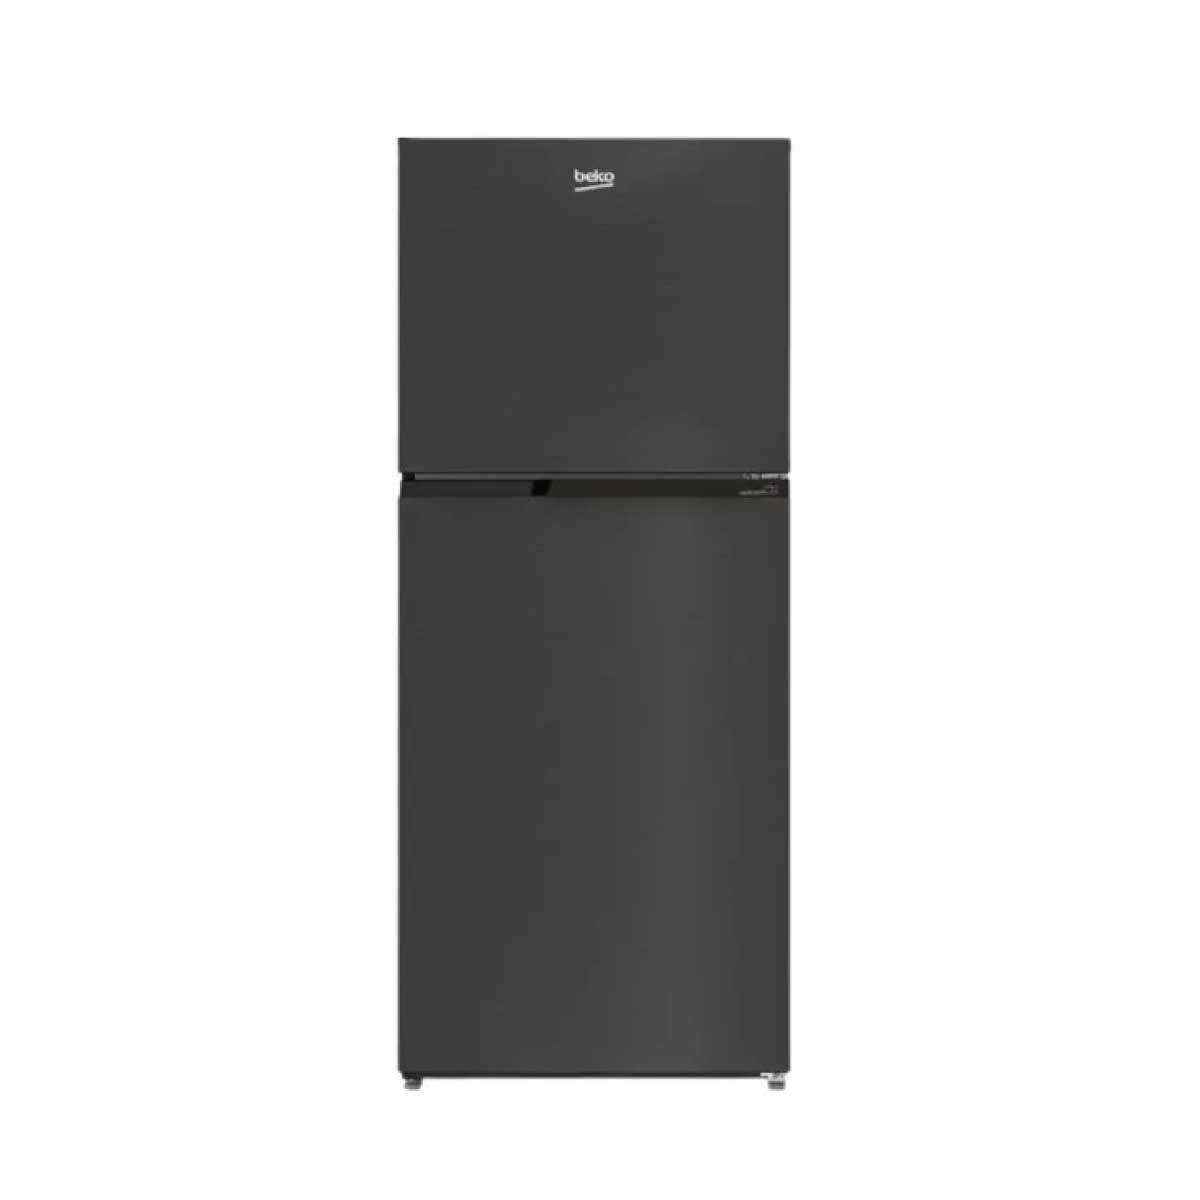 BEKO ตู้เย็น 2 ประตู 12 คิว 340 ลิตร สีดำ  รุ่น RDNT371I10HFSK